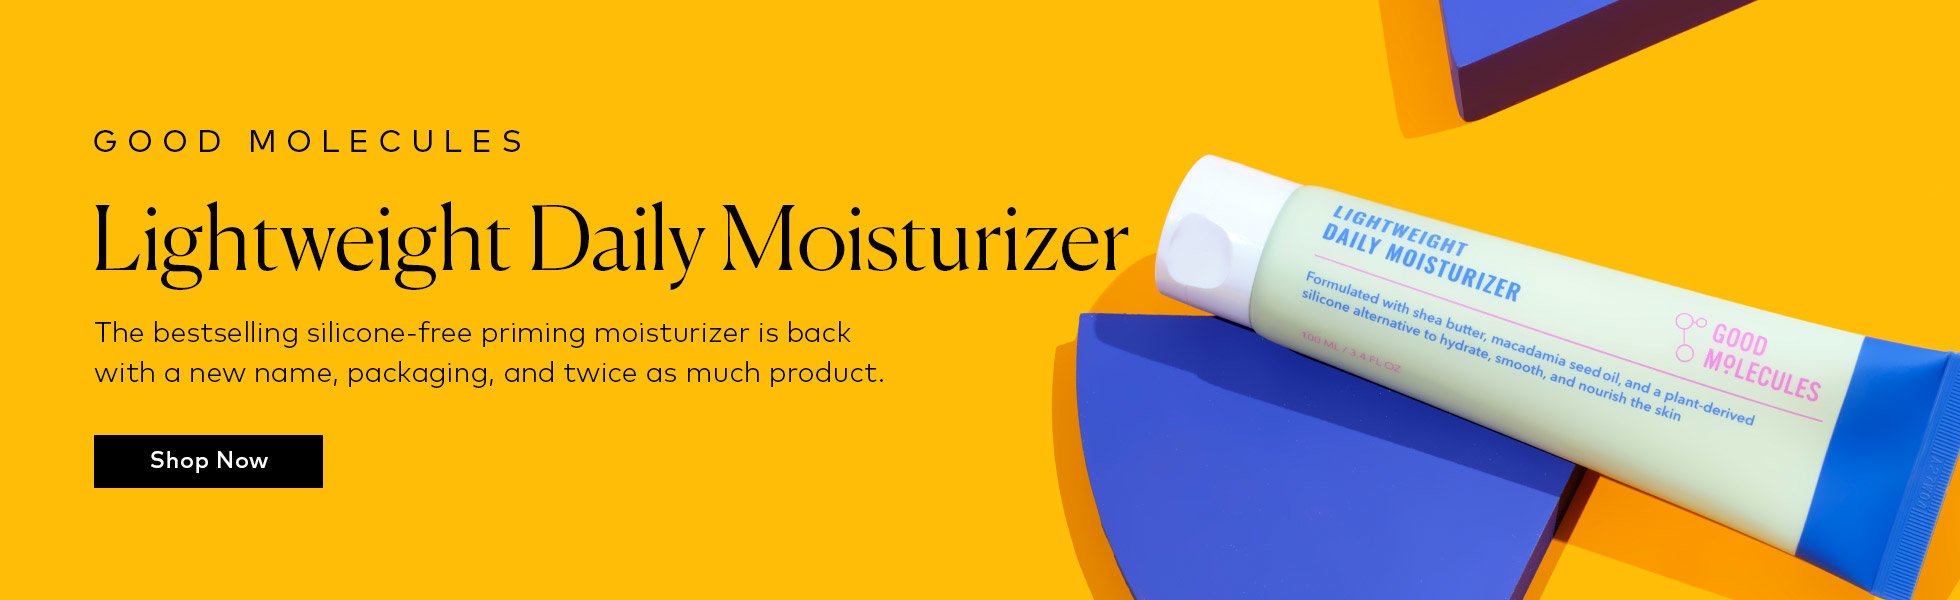 Shop the Good Molecules Lightweight Daily Moisturizer at Beautylish.com